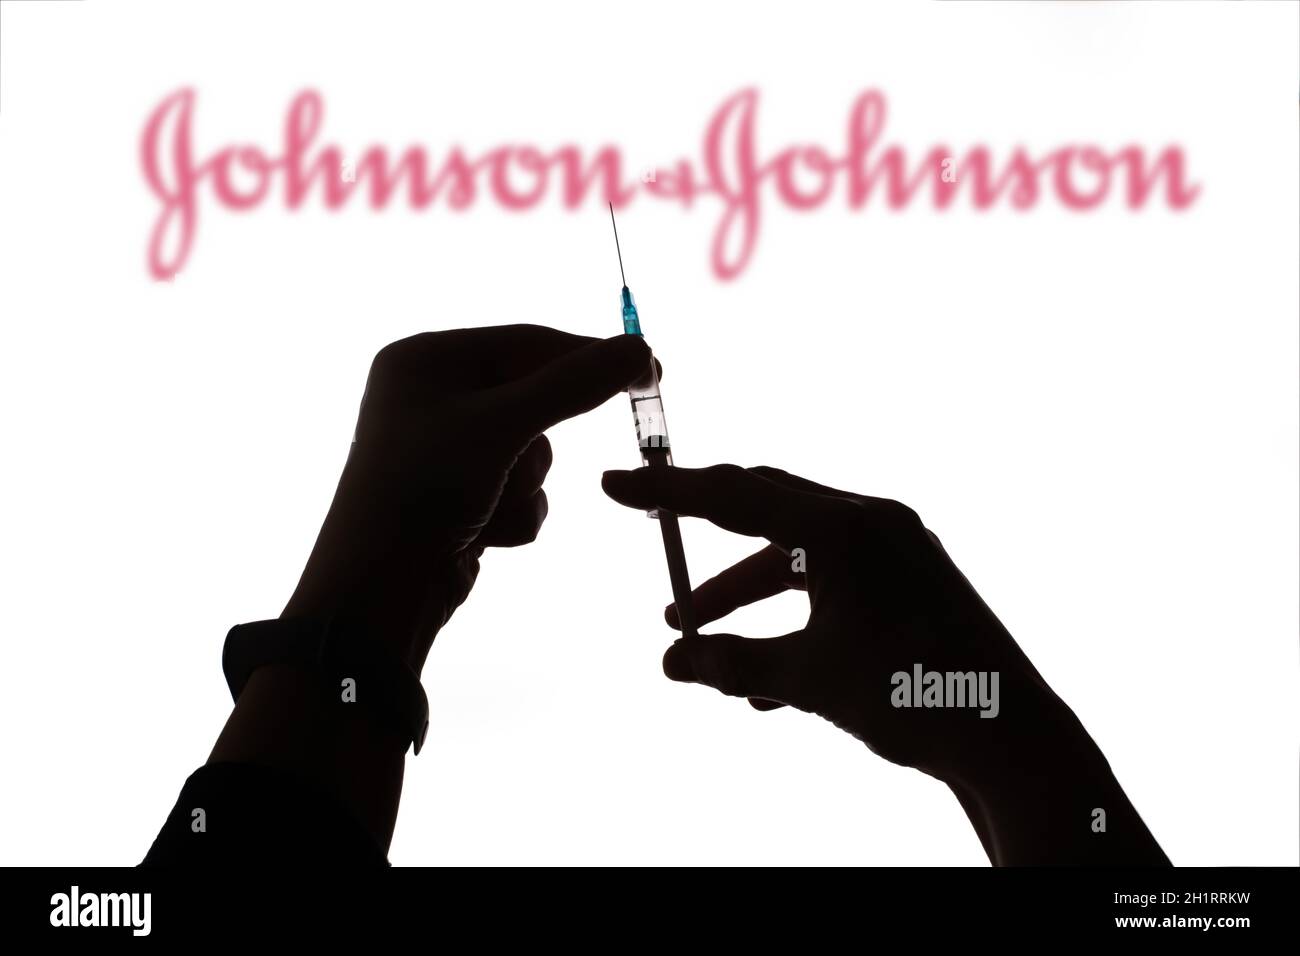 Cluj-Napoca, Romania - March 15, 2021:  New coronavirus vaccine Johnson and Johnson  concept, blurred Johnson and Johnson logo on the background. Covi Stock Photo